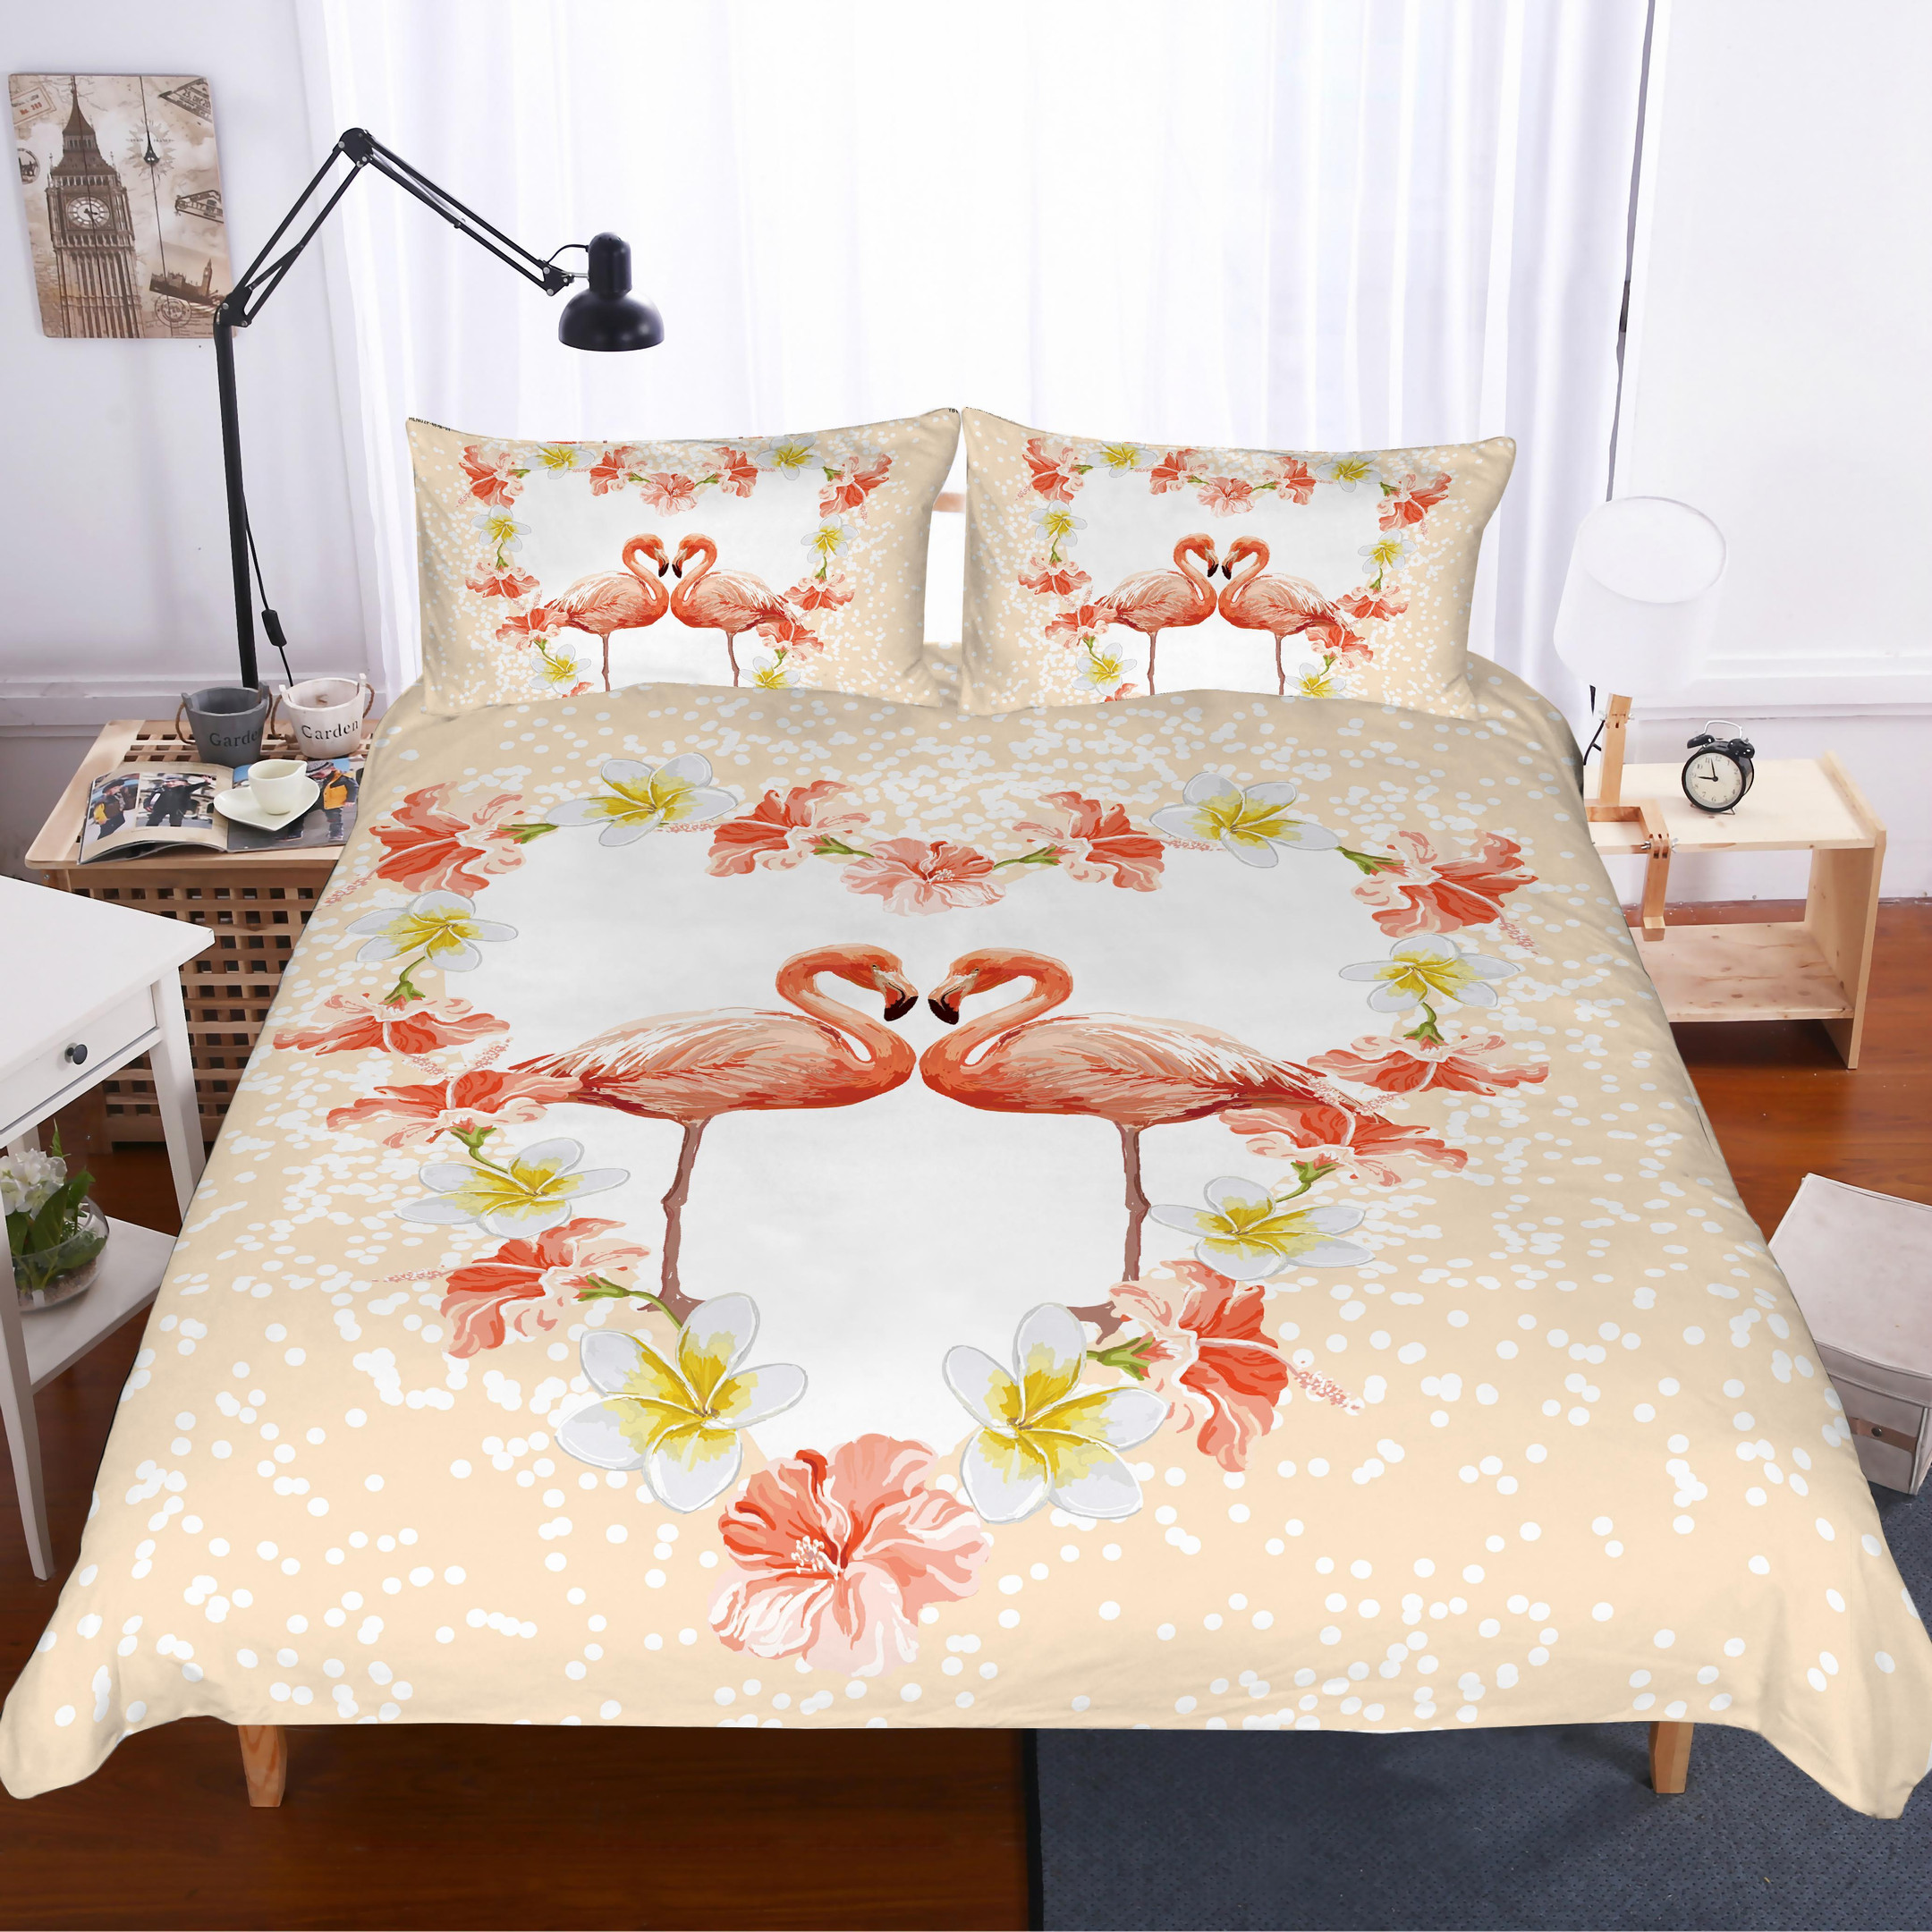 flamingo pair sheet set with duvet cover bedding ensemble juvye